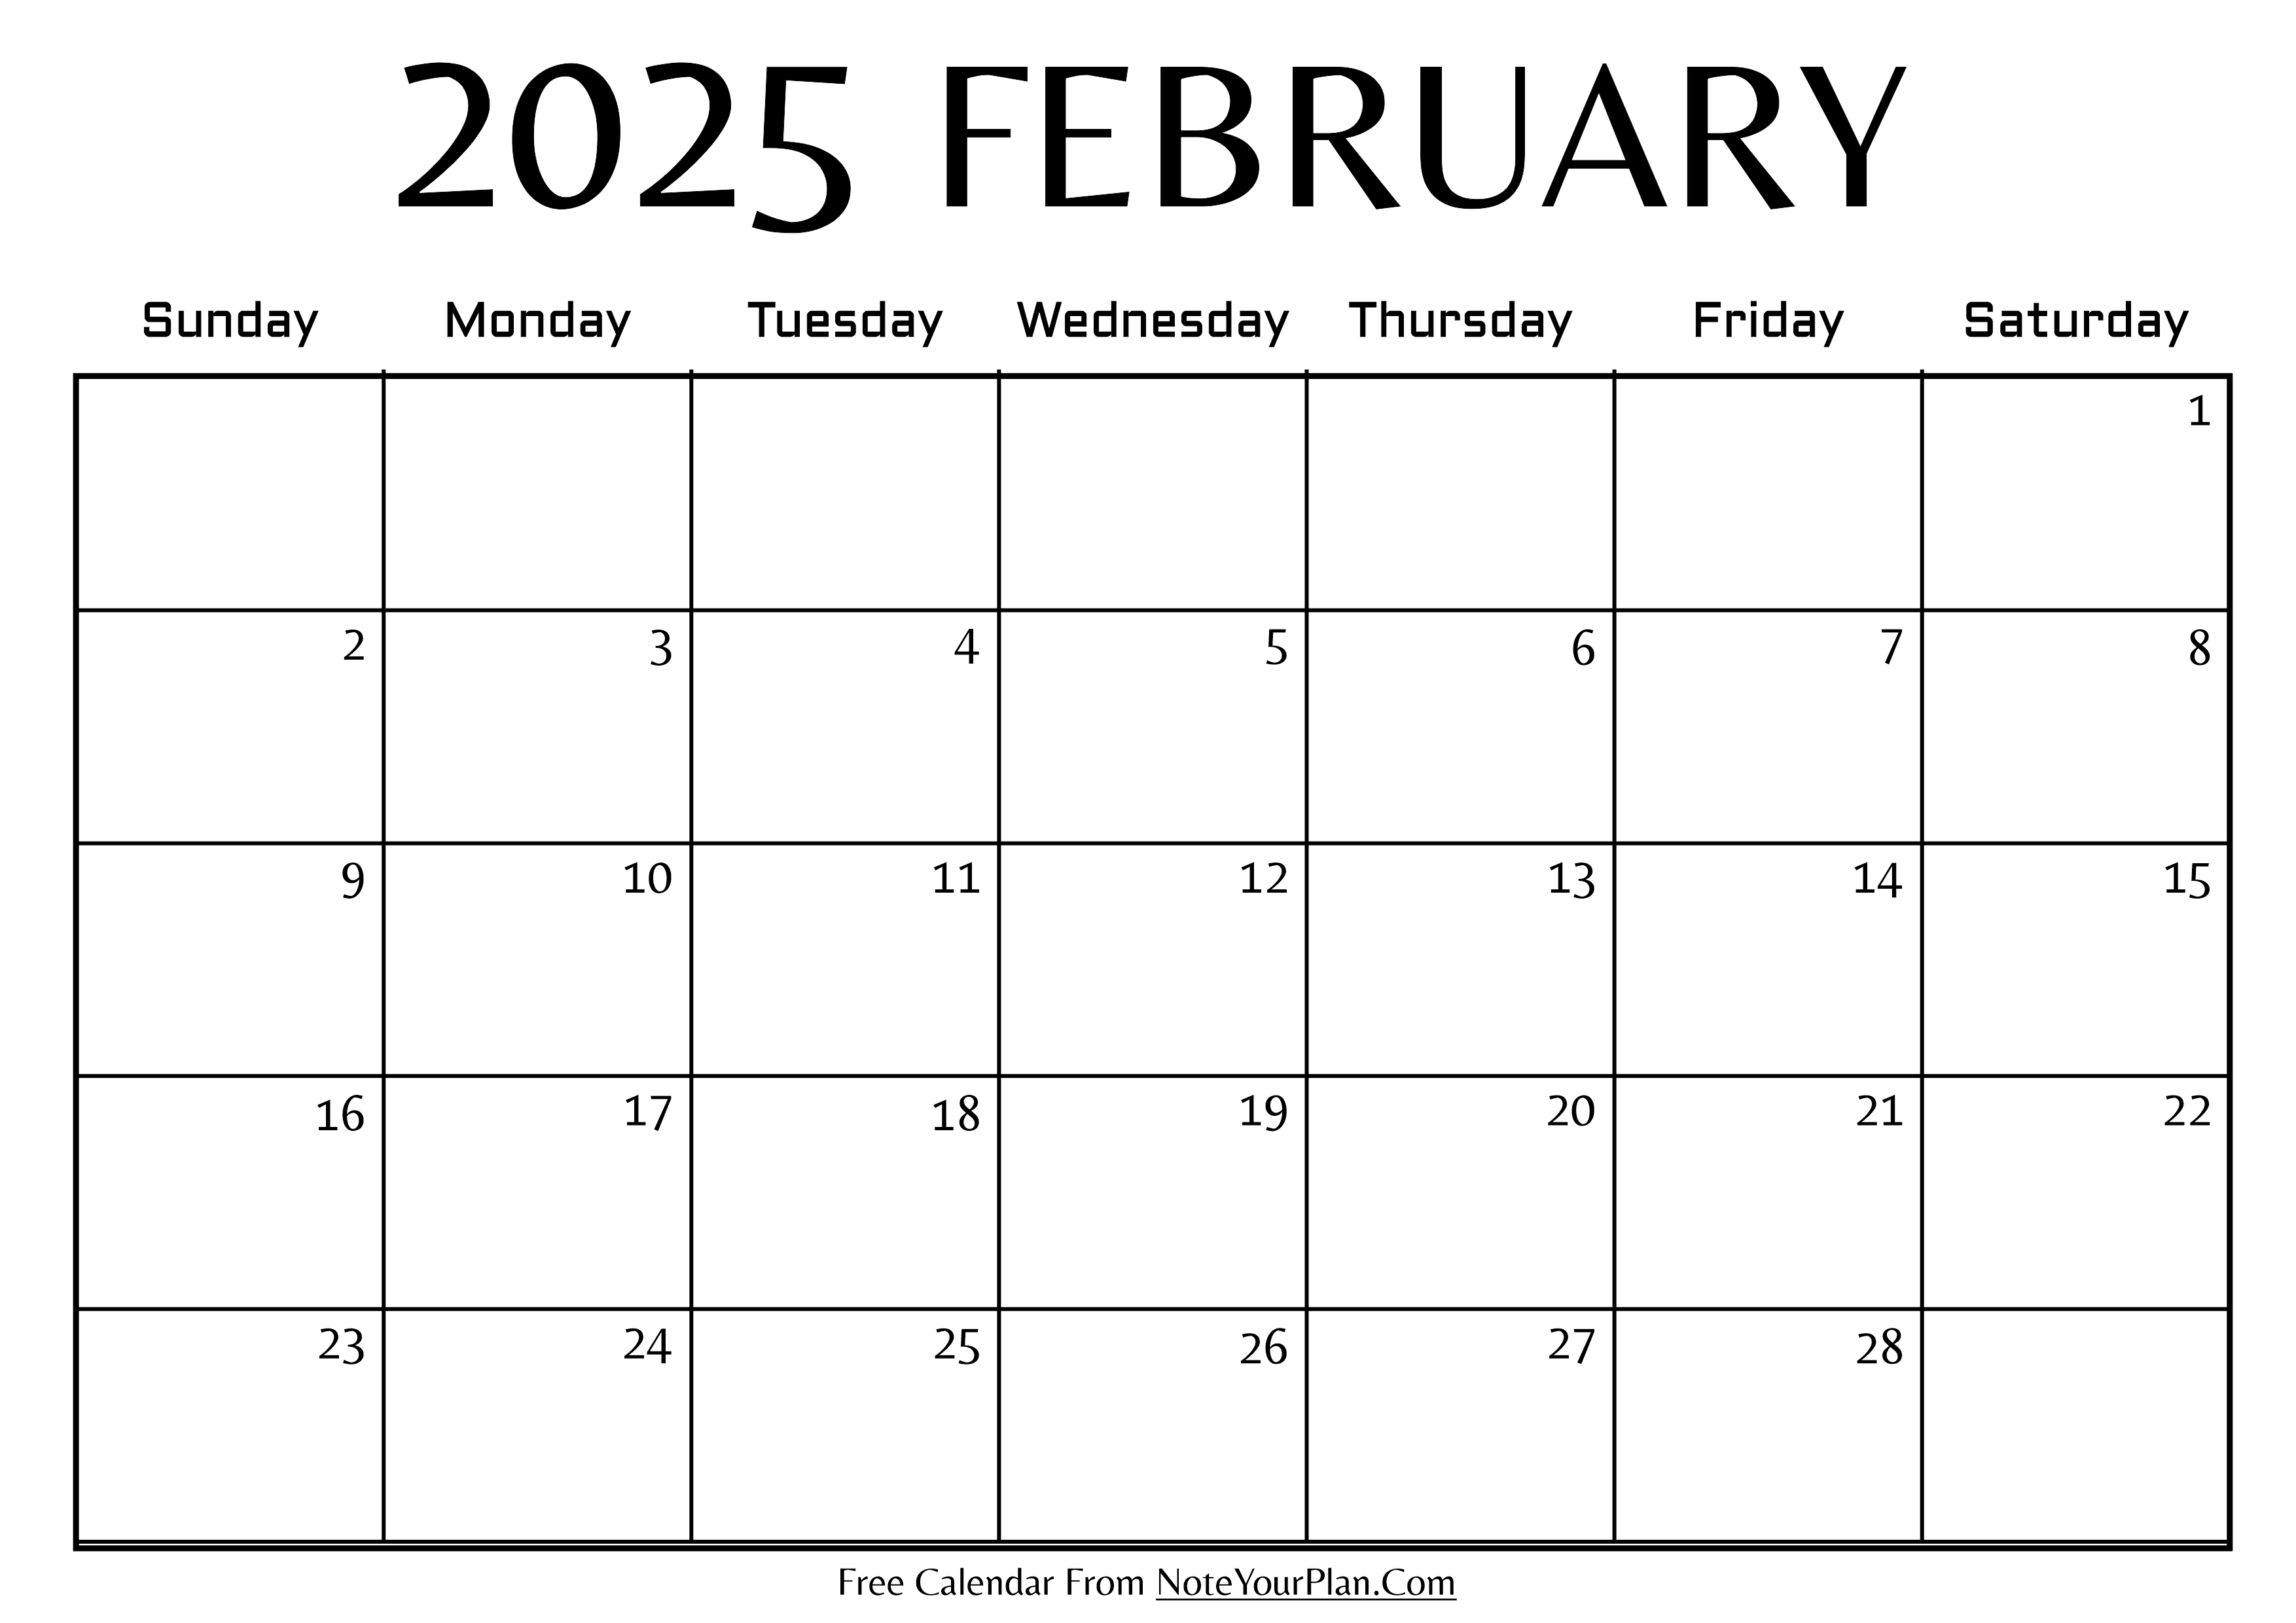 Februay 2025 Calendar Template